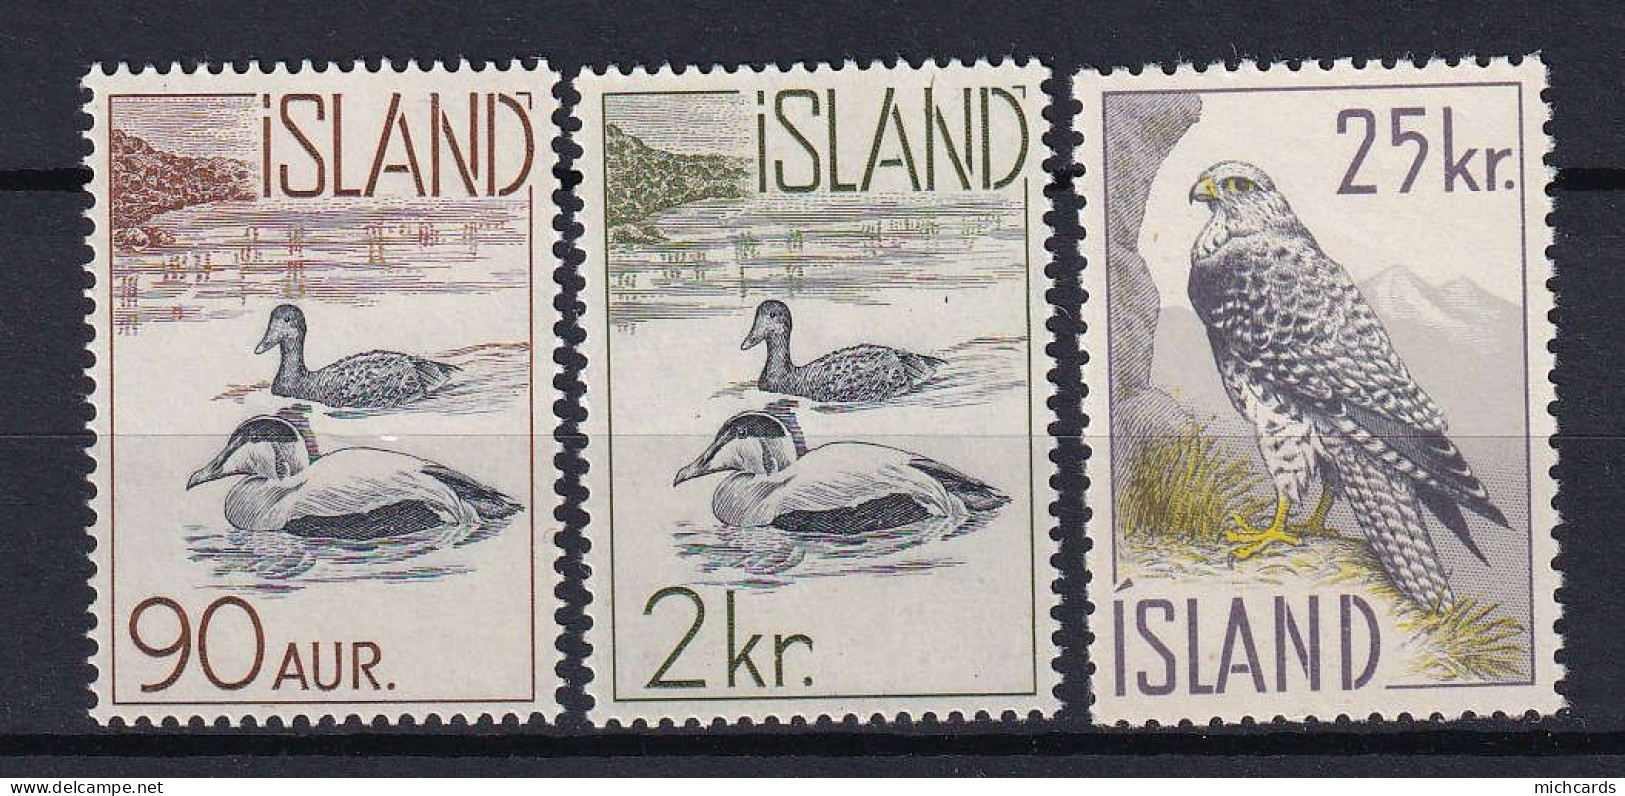 172 ISLANDE 1959 - Y&T 295 + 296 + 298 - Complet Oiseau Rapace Canard - Neuf ** (MNH) Sans Charniere - Ungebraucht